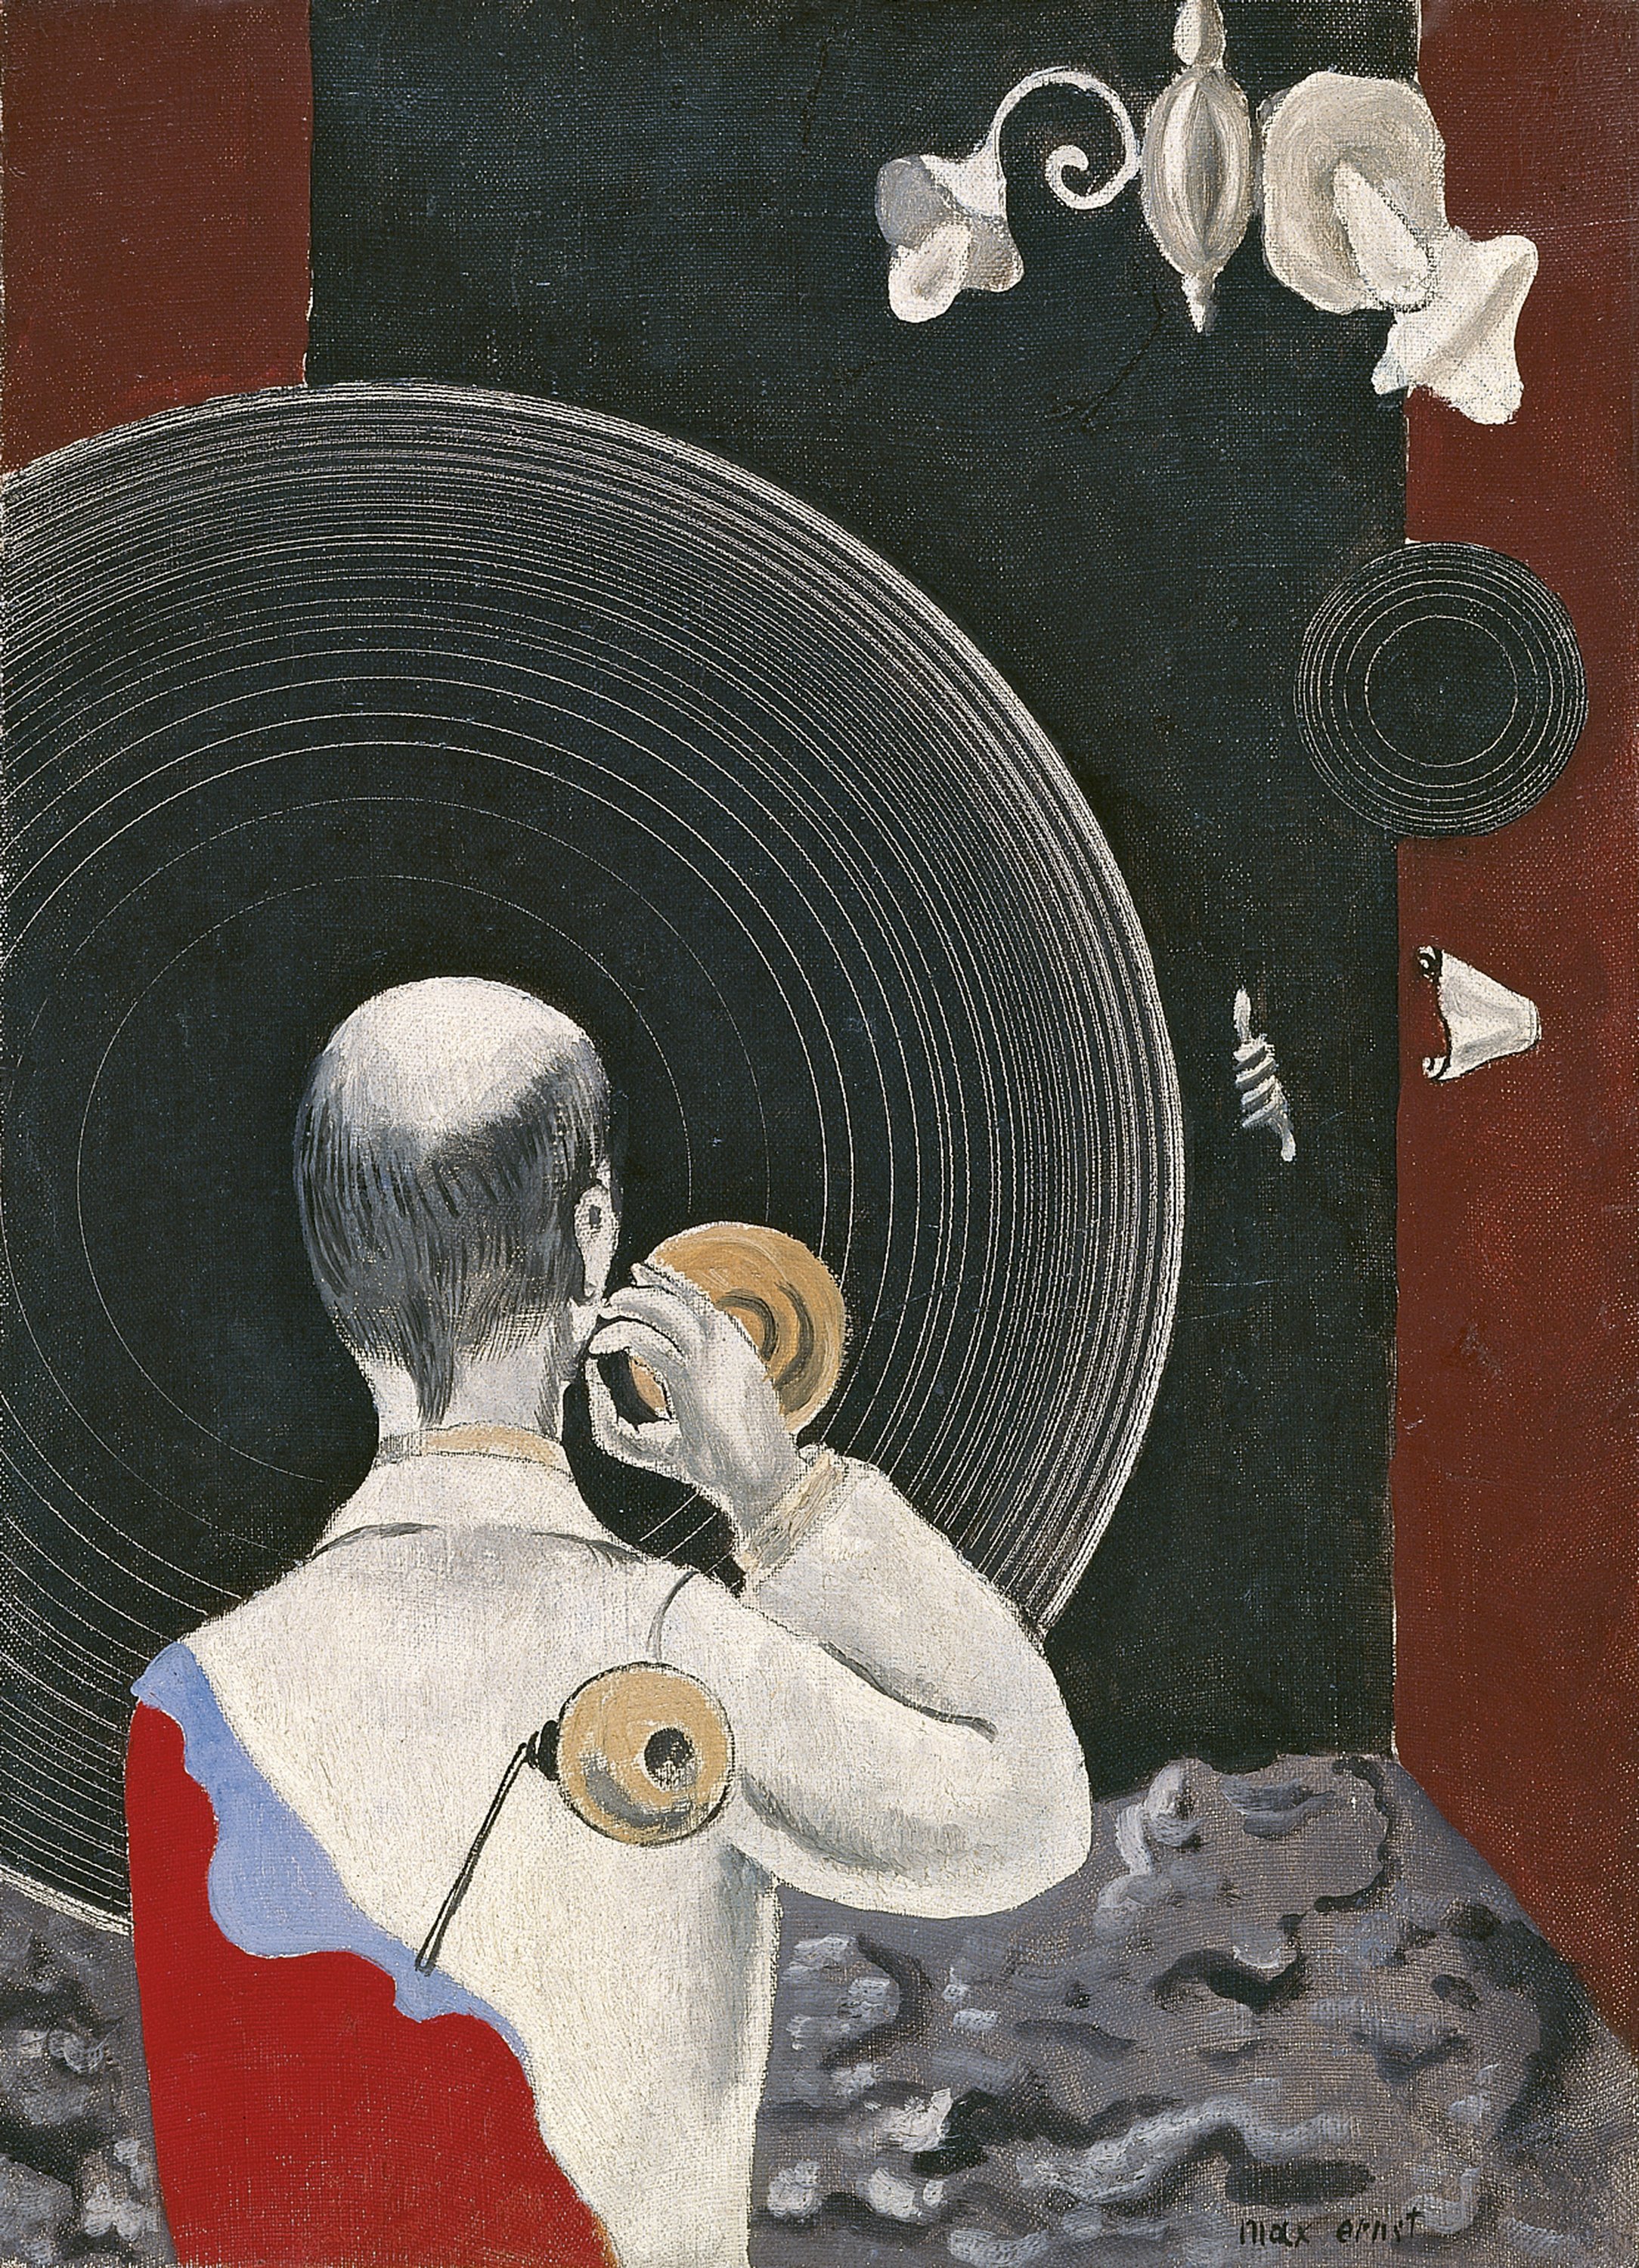 Untitled (Dada). Sin título. (Dadá), c. 1922-1923